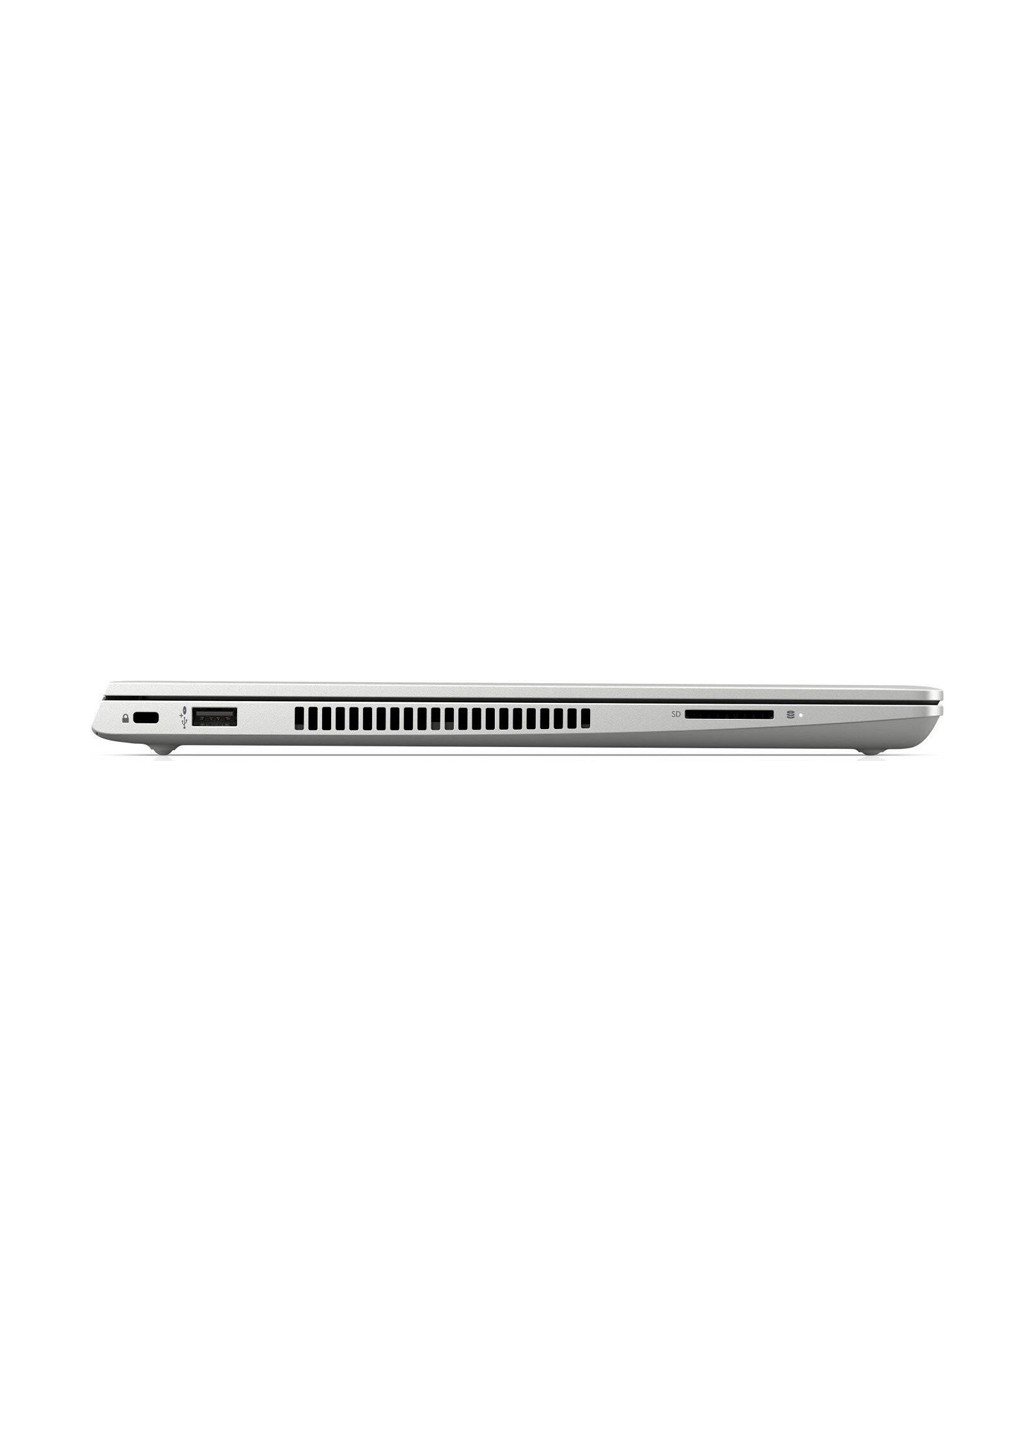 Ноутбук HP probook 440 g6 (4rz57av_v5) silver (158838072)